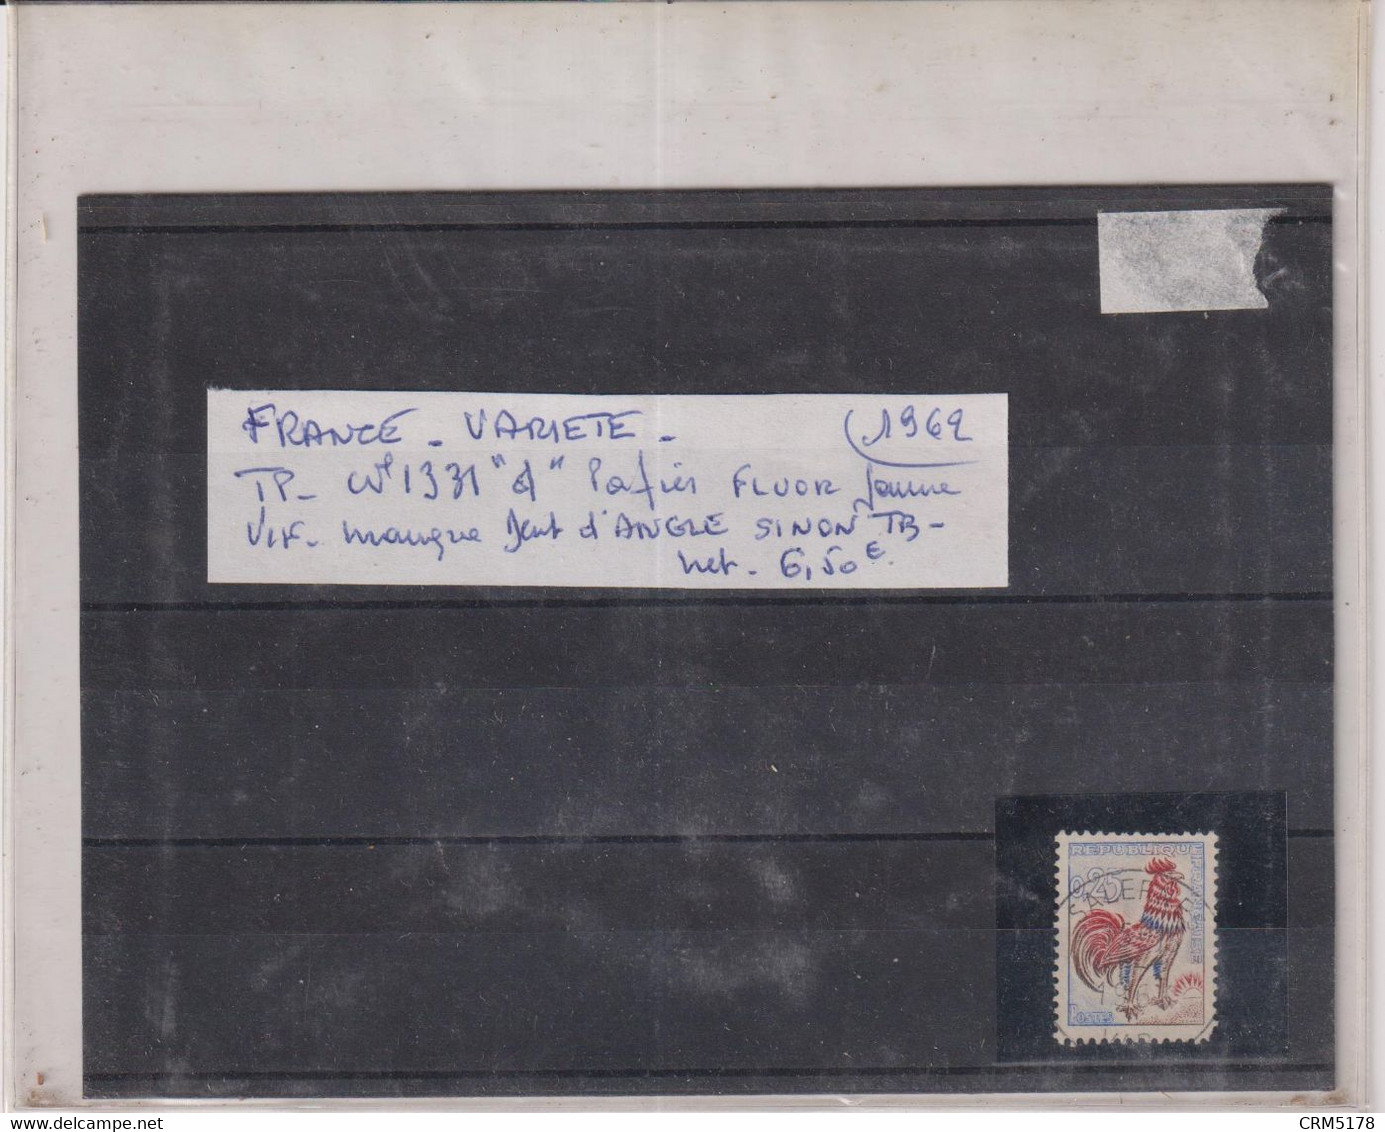 TP N°1331 "d" Papier Fluor Jaune Vif-manque Dent D'angle Sinon TB-1962 - Usati